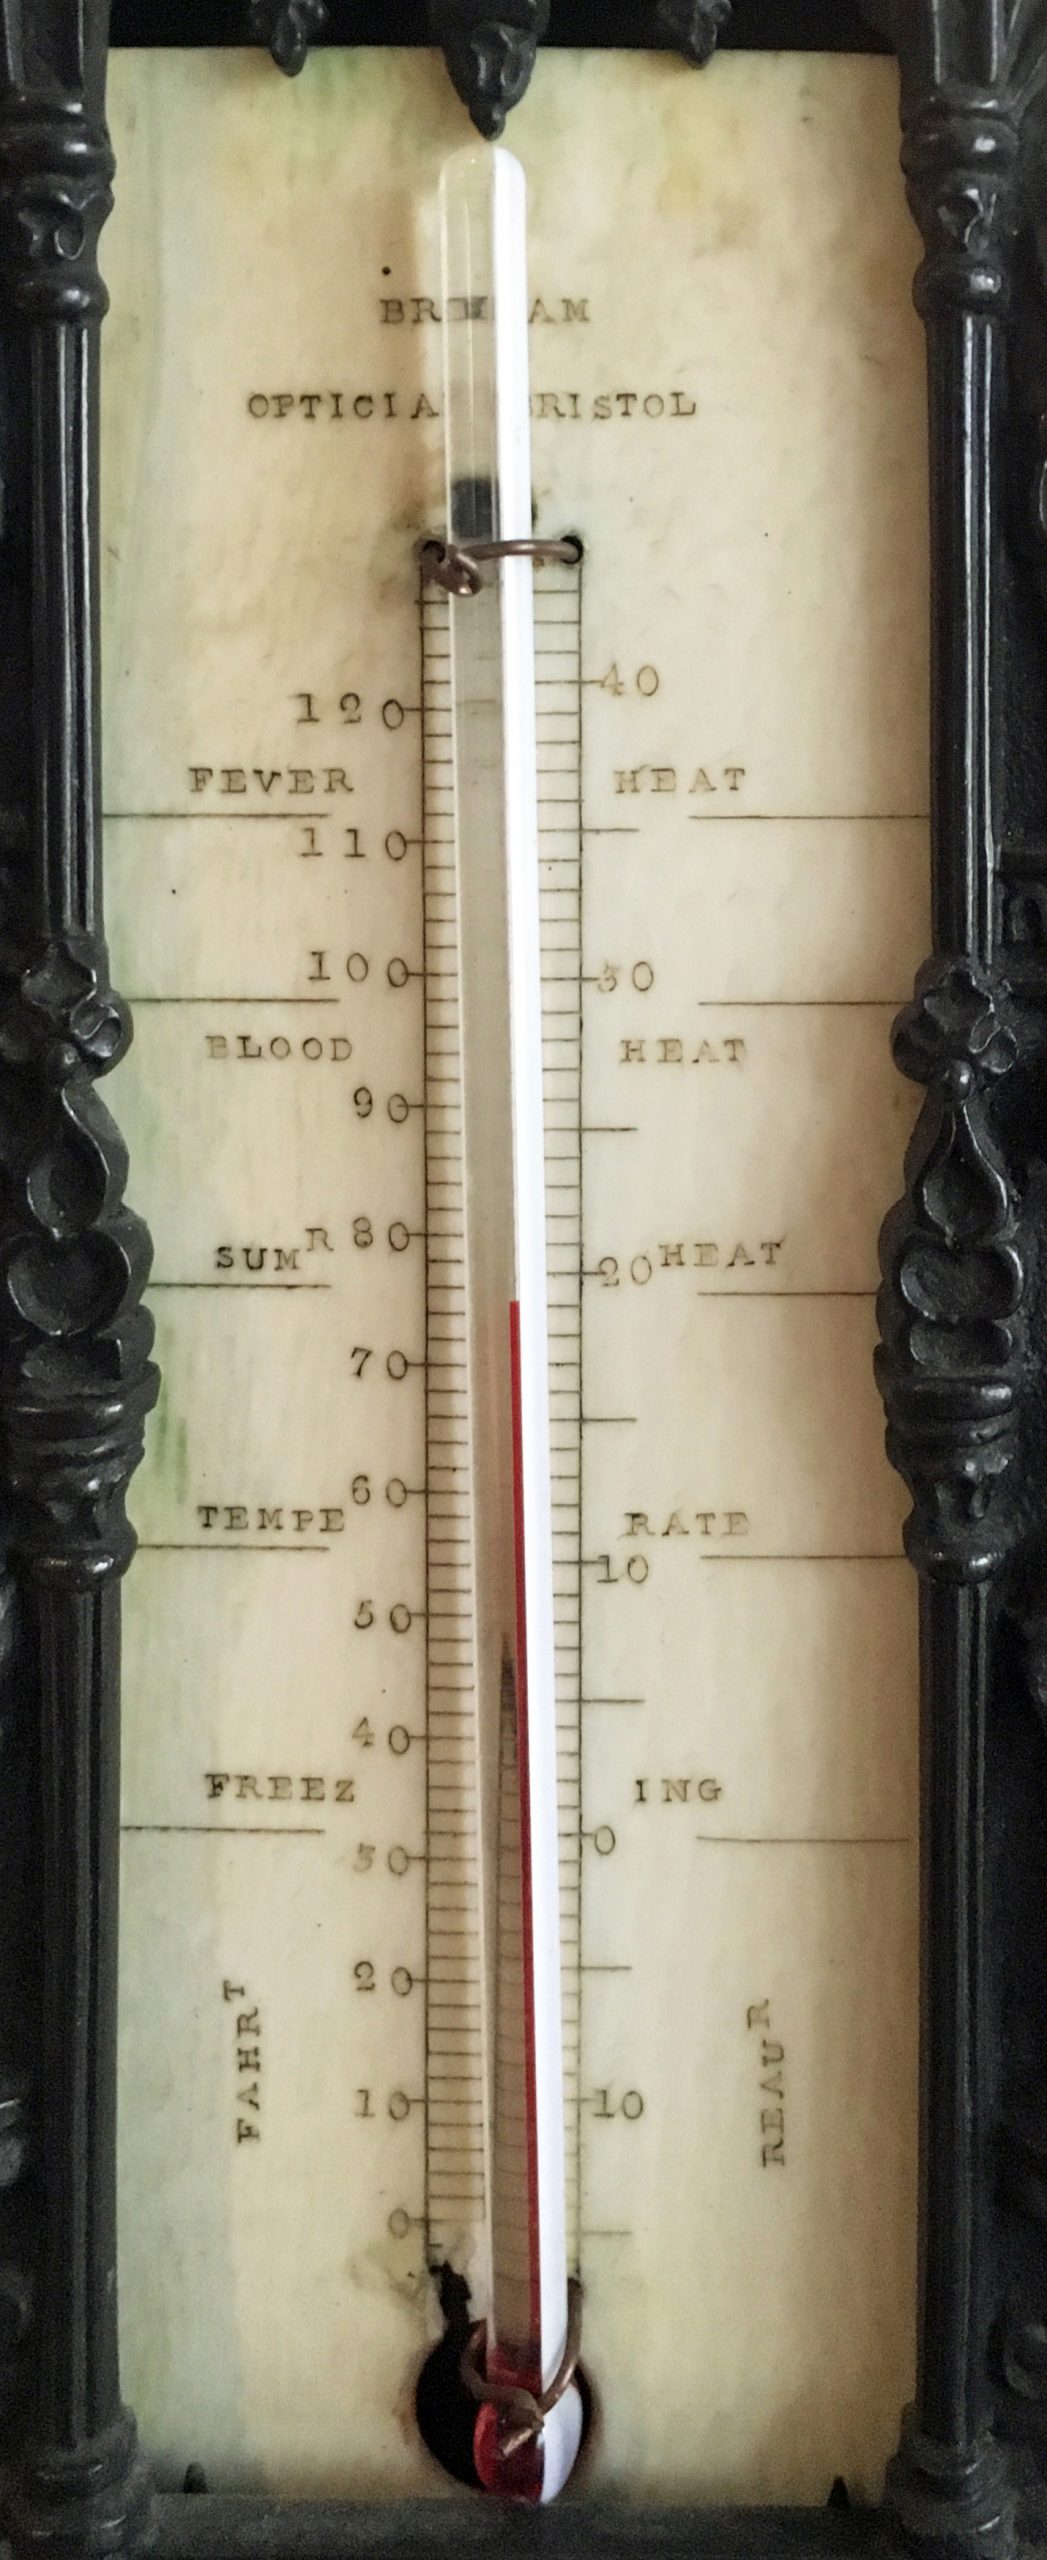 https://susansilverantiques.com/wp-content/uploads/bronze-desk-thermometer-circa-1828-susan-silver-antiques-detail-ivory-face-view-3823-10-scaled.jpg